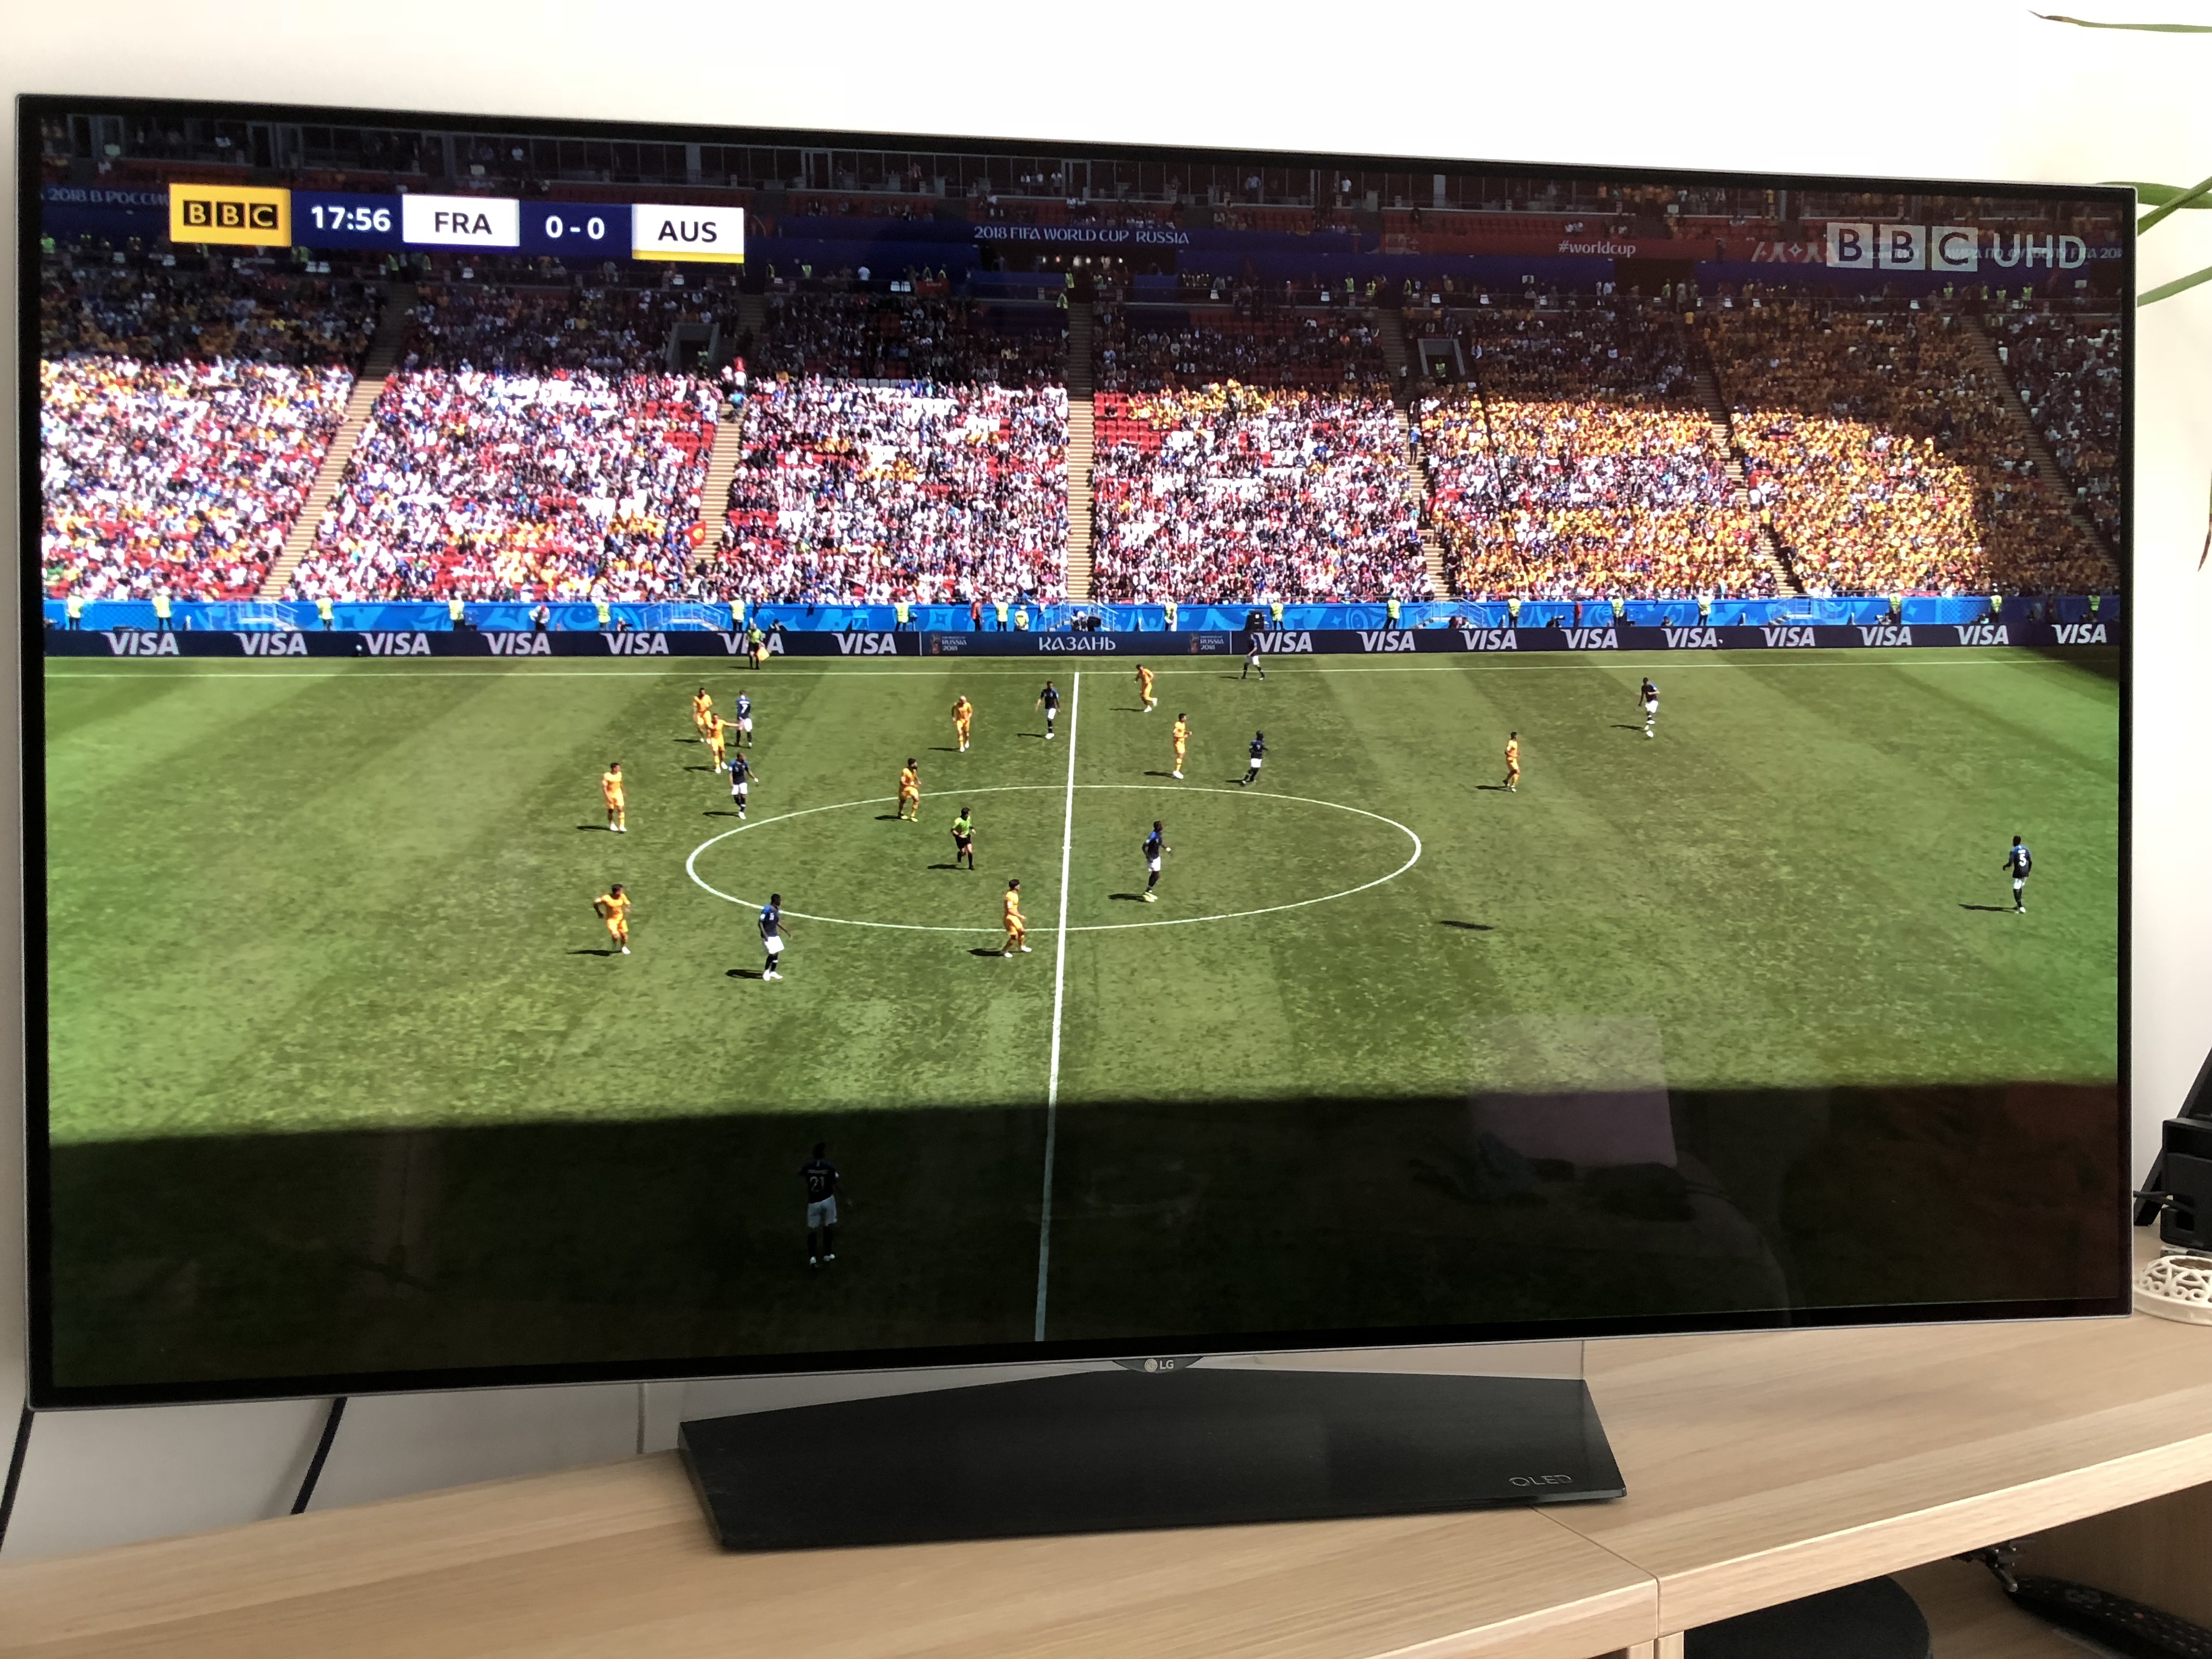 France vs Australia BBC UHD World Cup HDR example